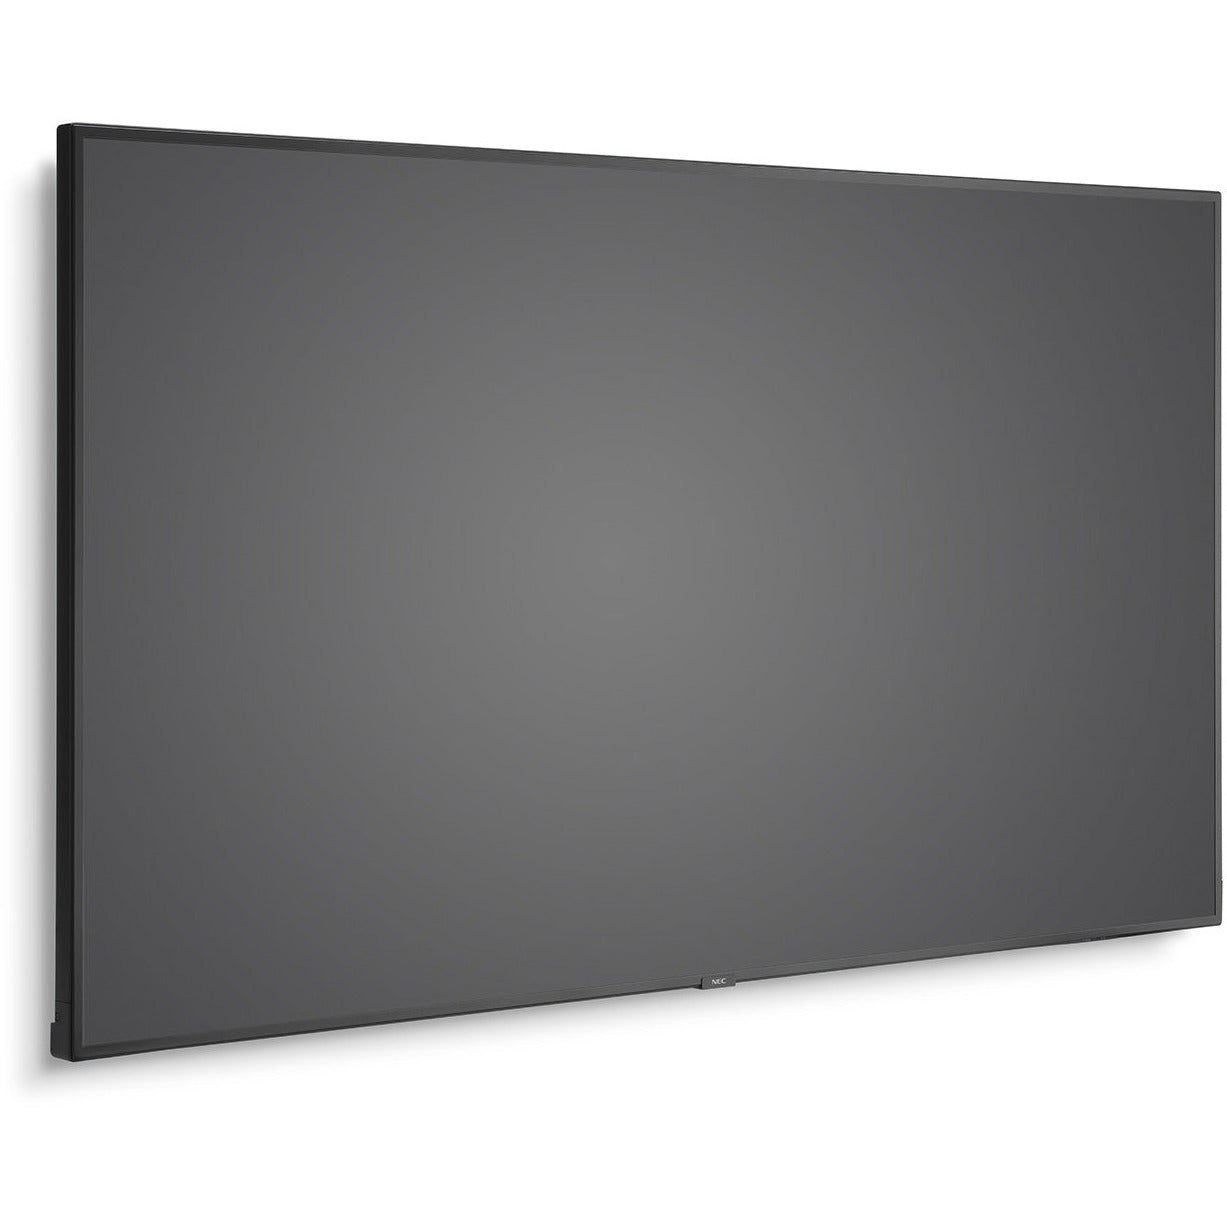 NEC MultiSync® V754Q LCD 75" Midrange Large Format Display